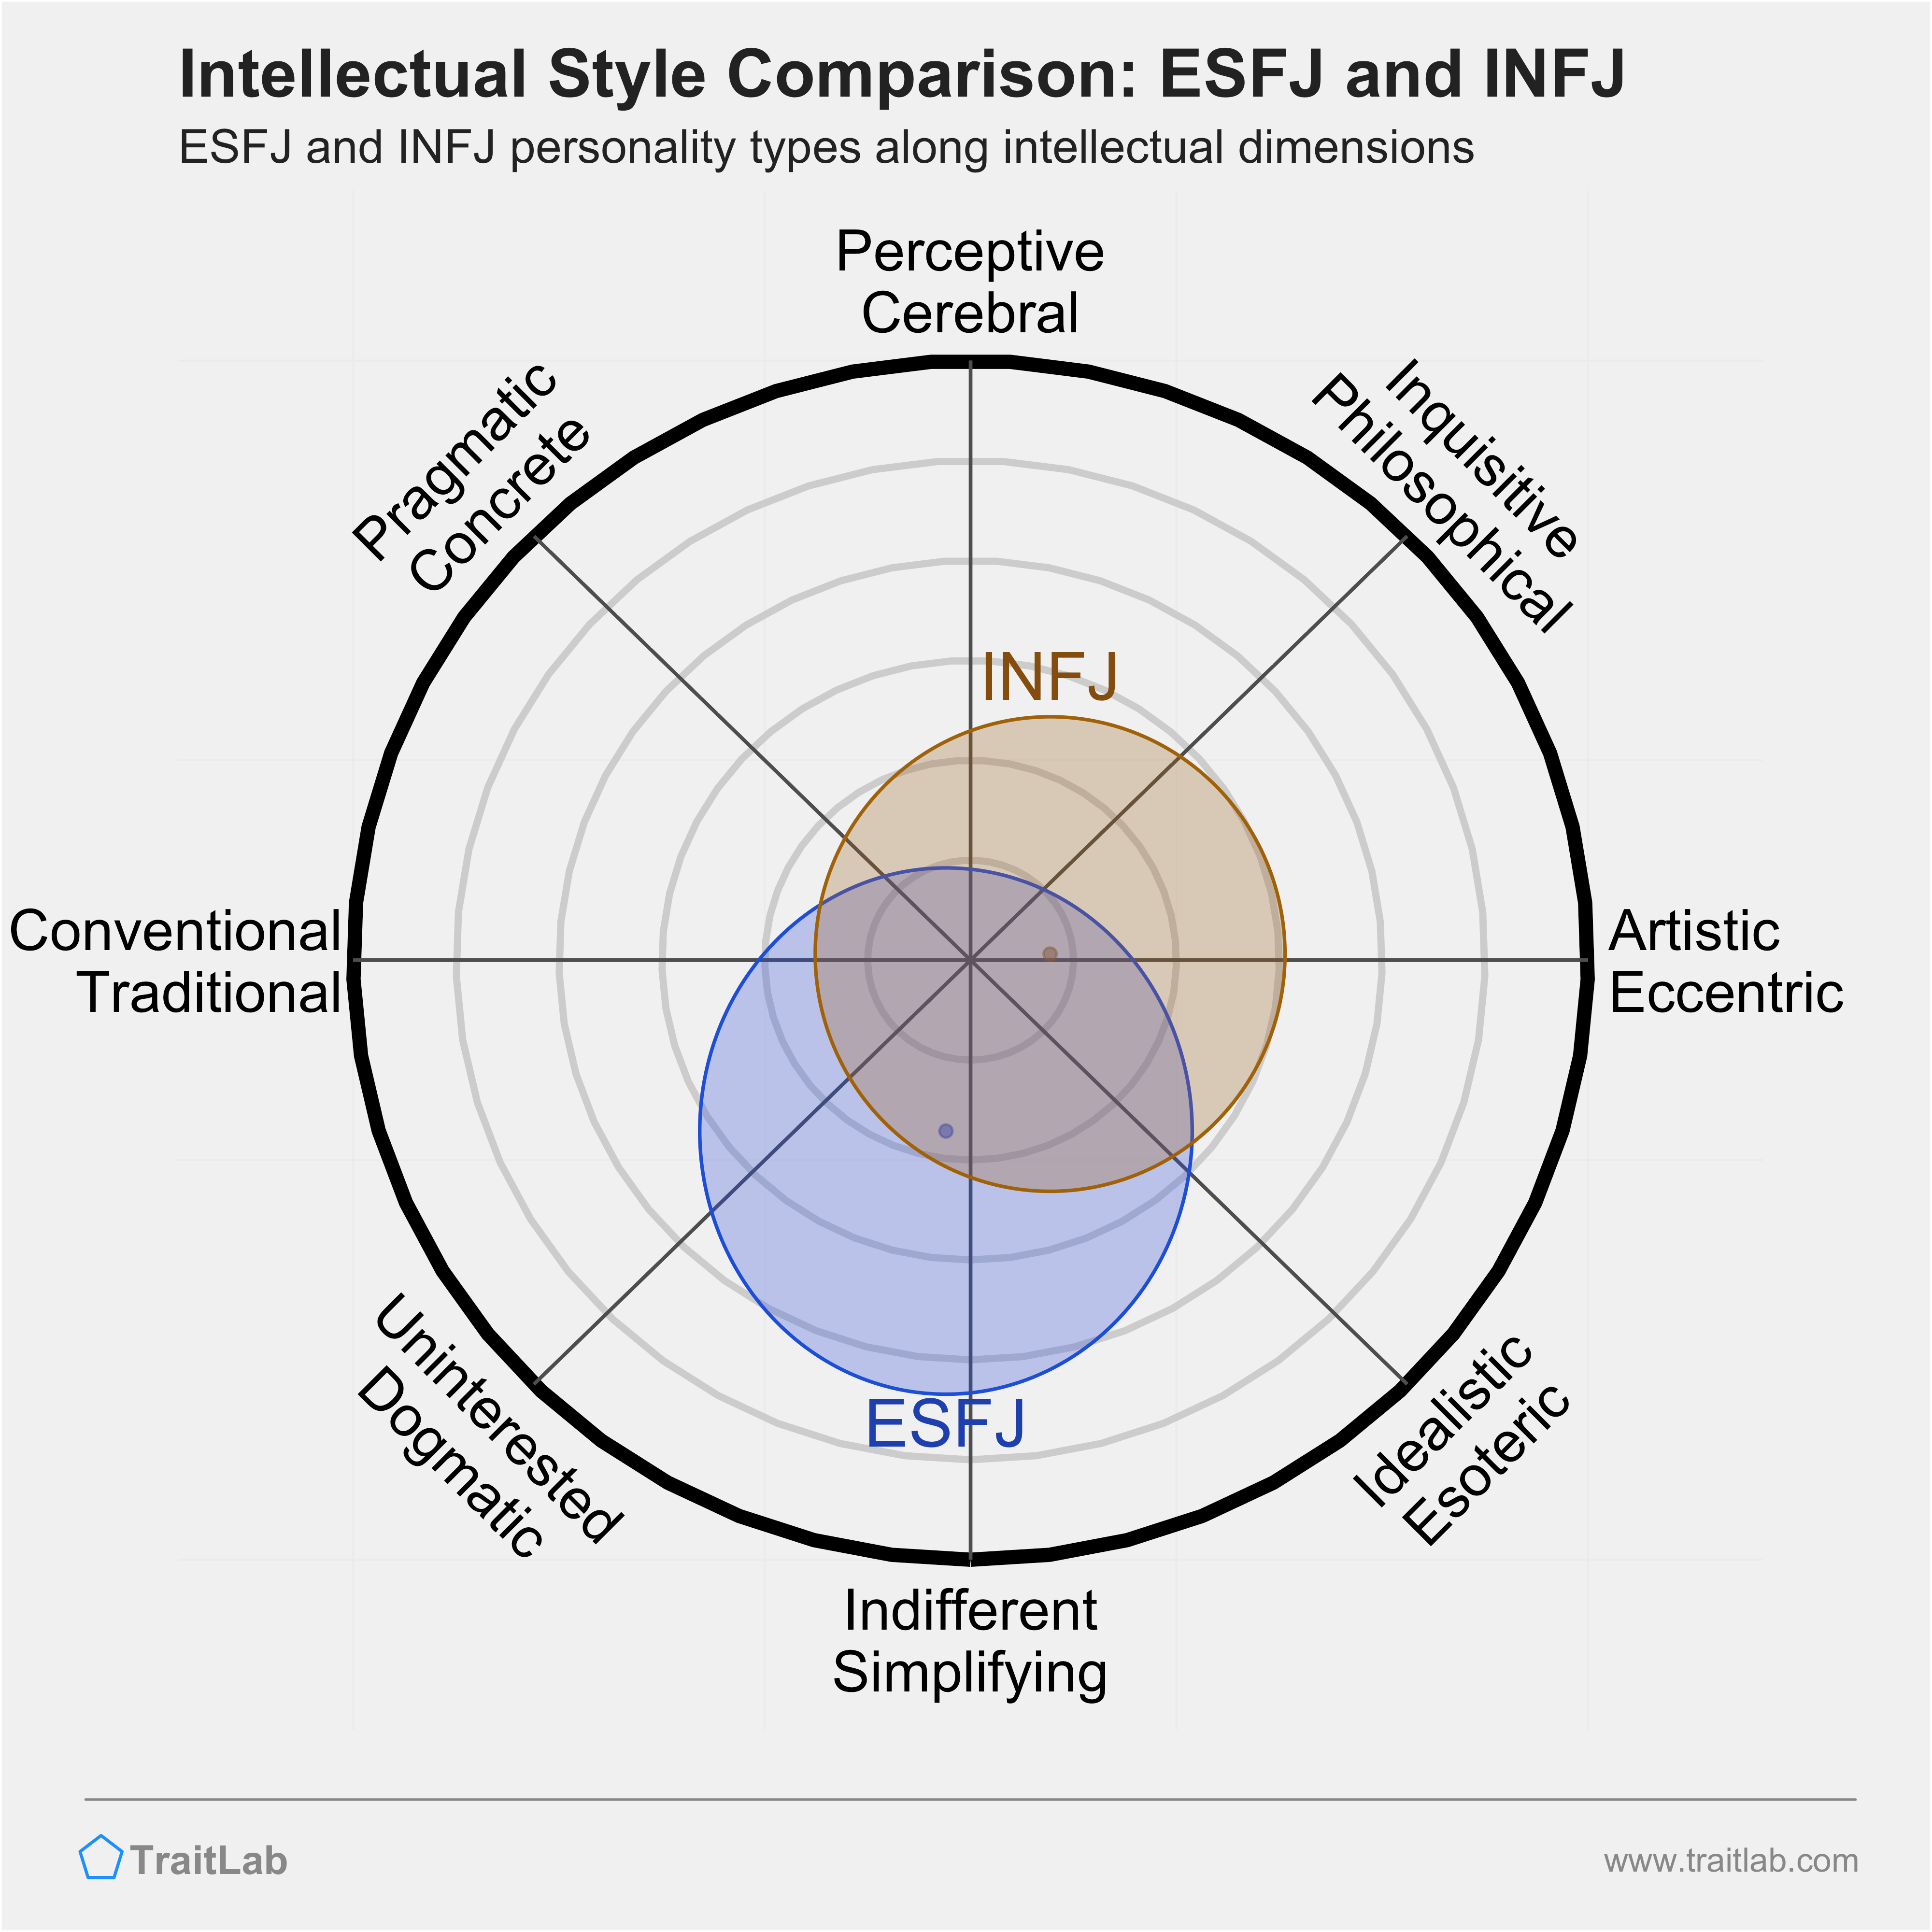 ESFJ and INFJ comparison across intellectual dimensions